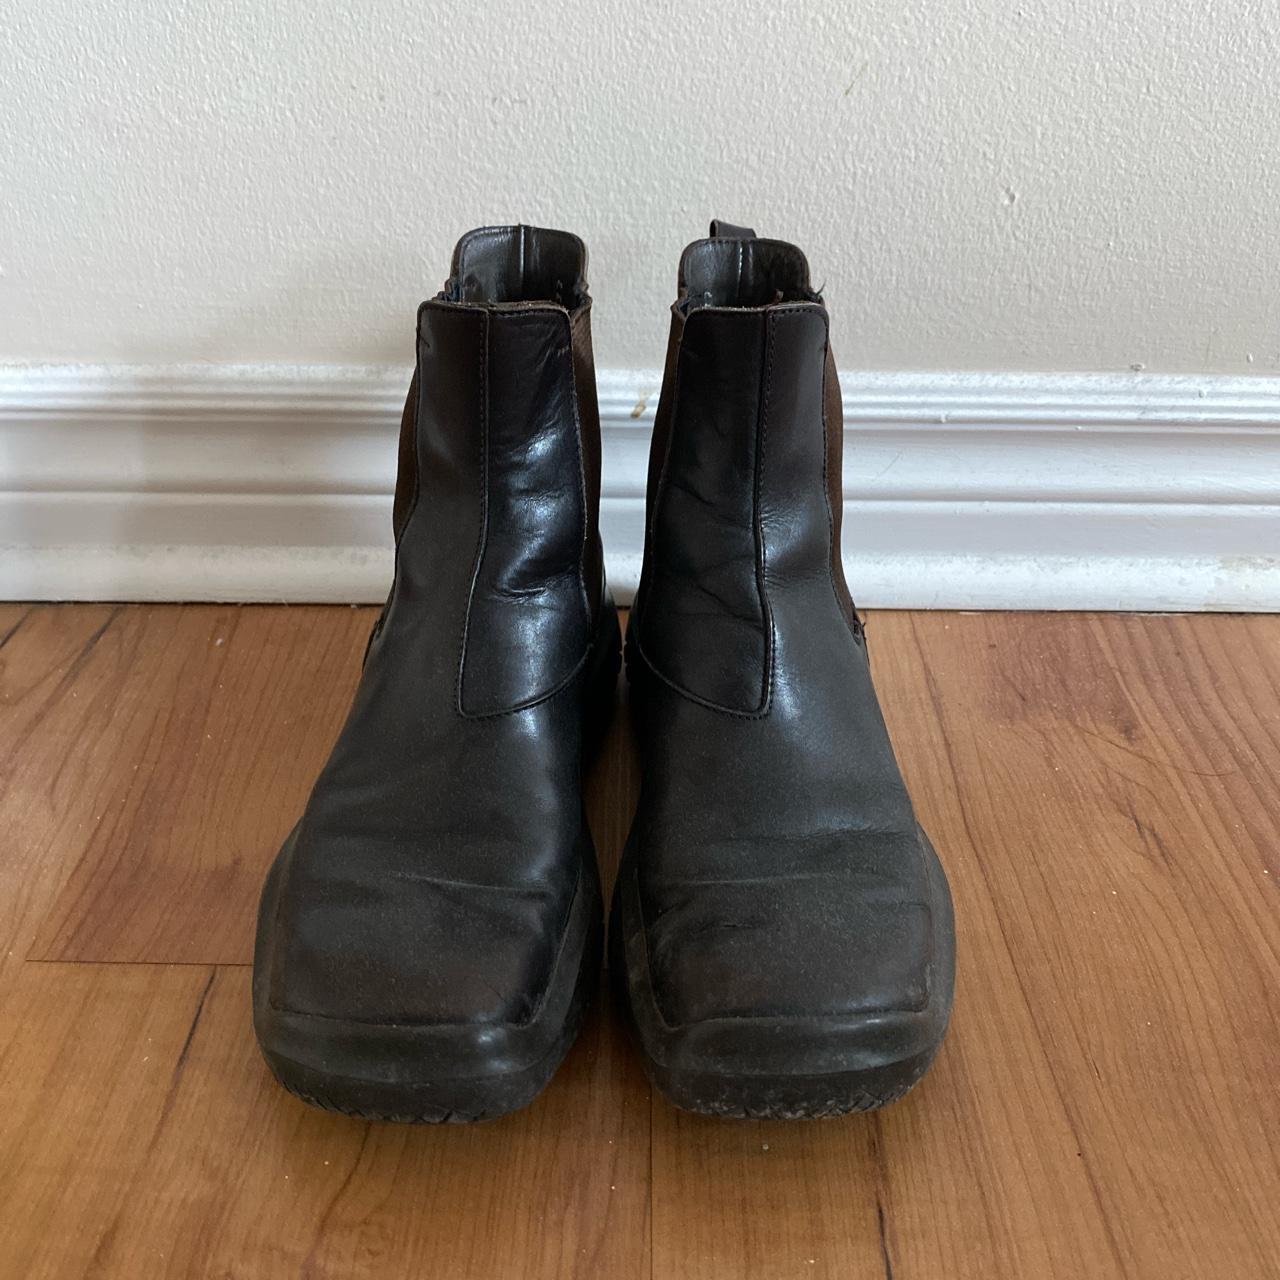 Vintage prada square toe boots in dark brown leather... - Depop